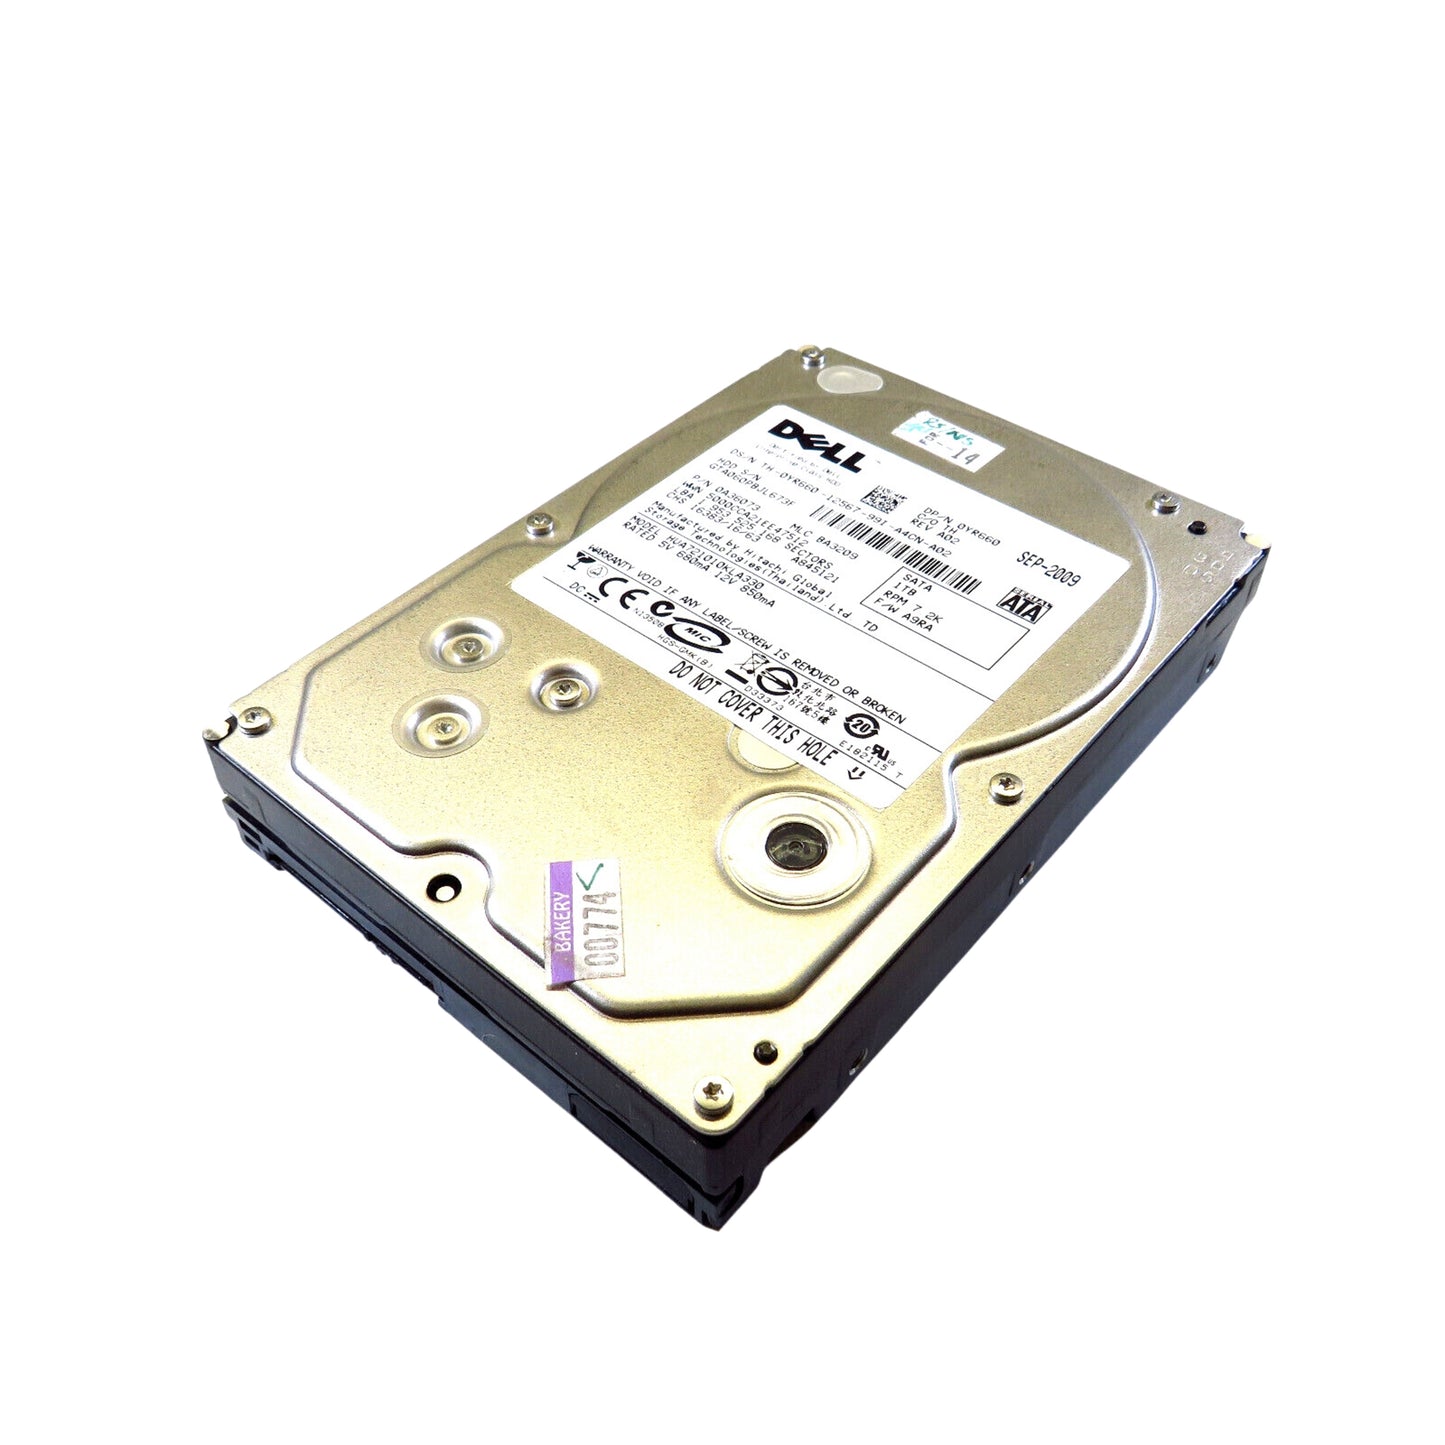 Dell YR660 3.5" 1TB 7200RPM SATA II Hard Disk Drive (HDD), Silver (Refurbished)